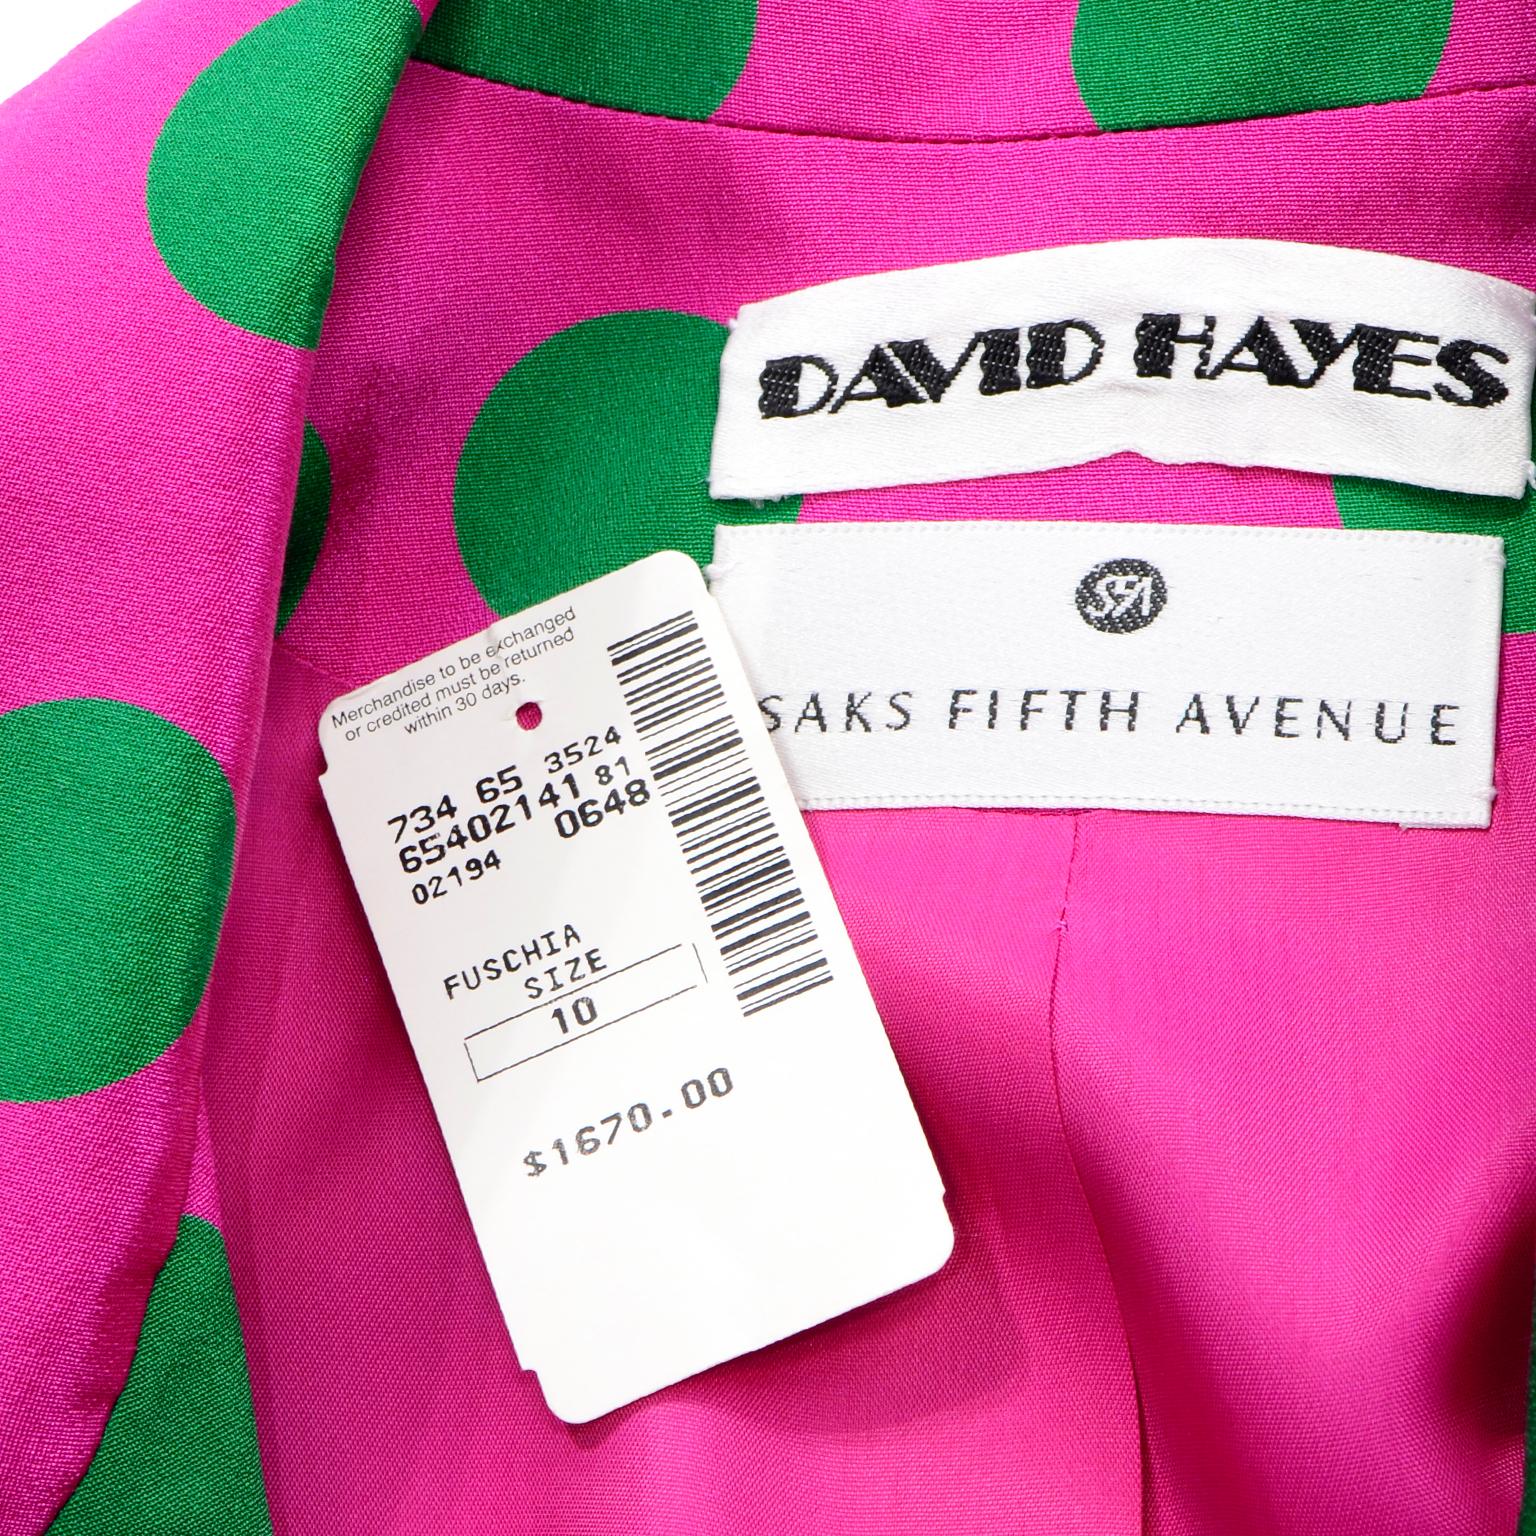 David Hayes Vintage Silk Pink & Green Polka Dot Skirt Jacket & Blouse Suit $1670 7